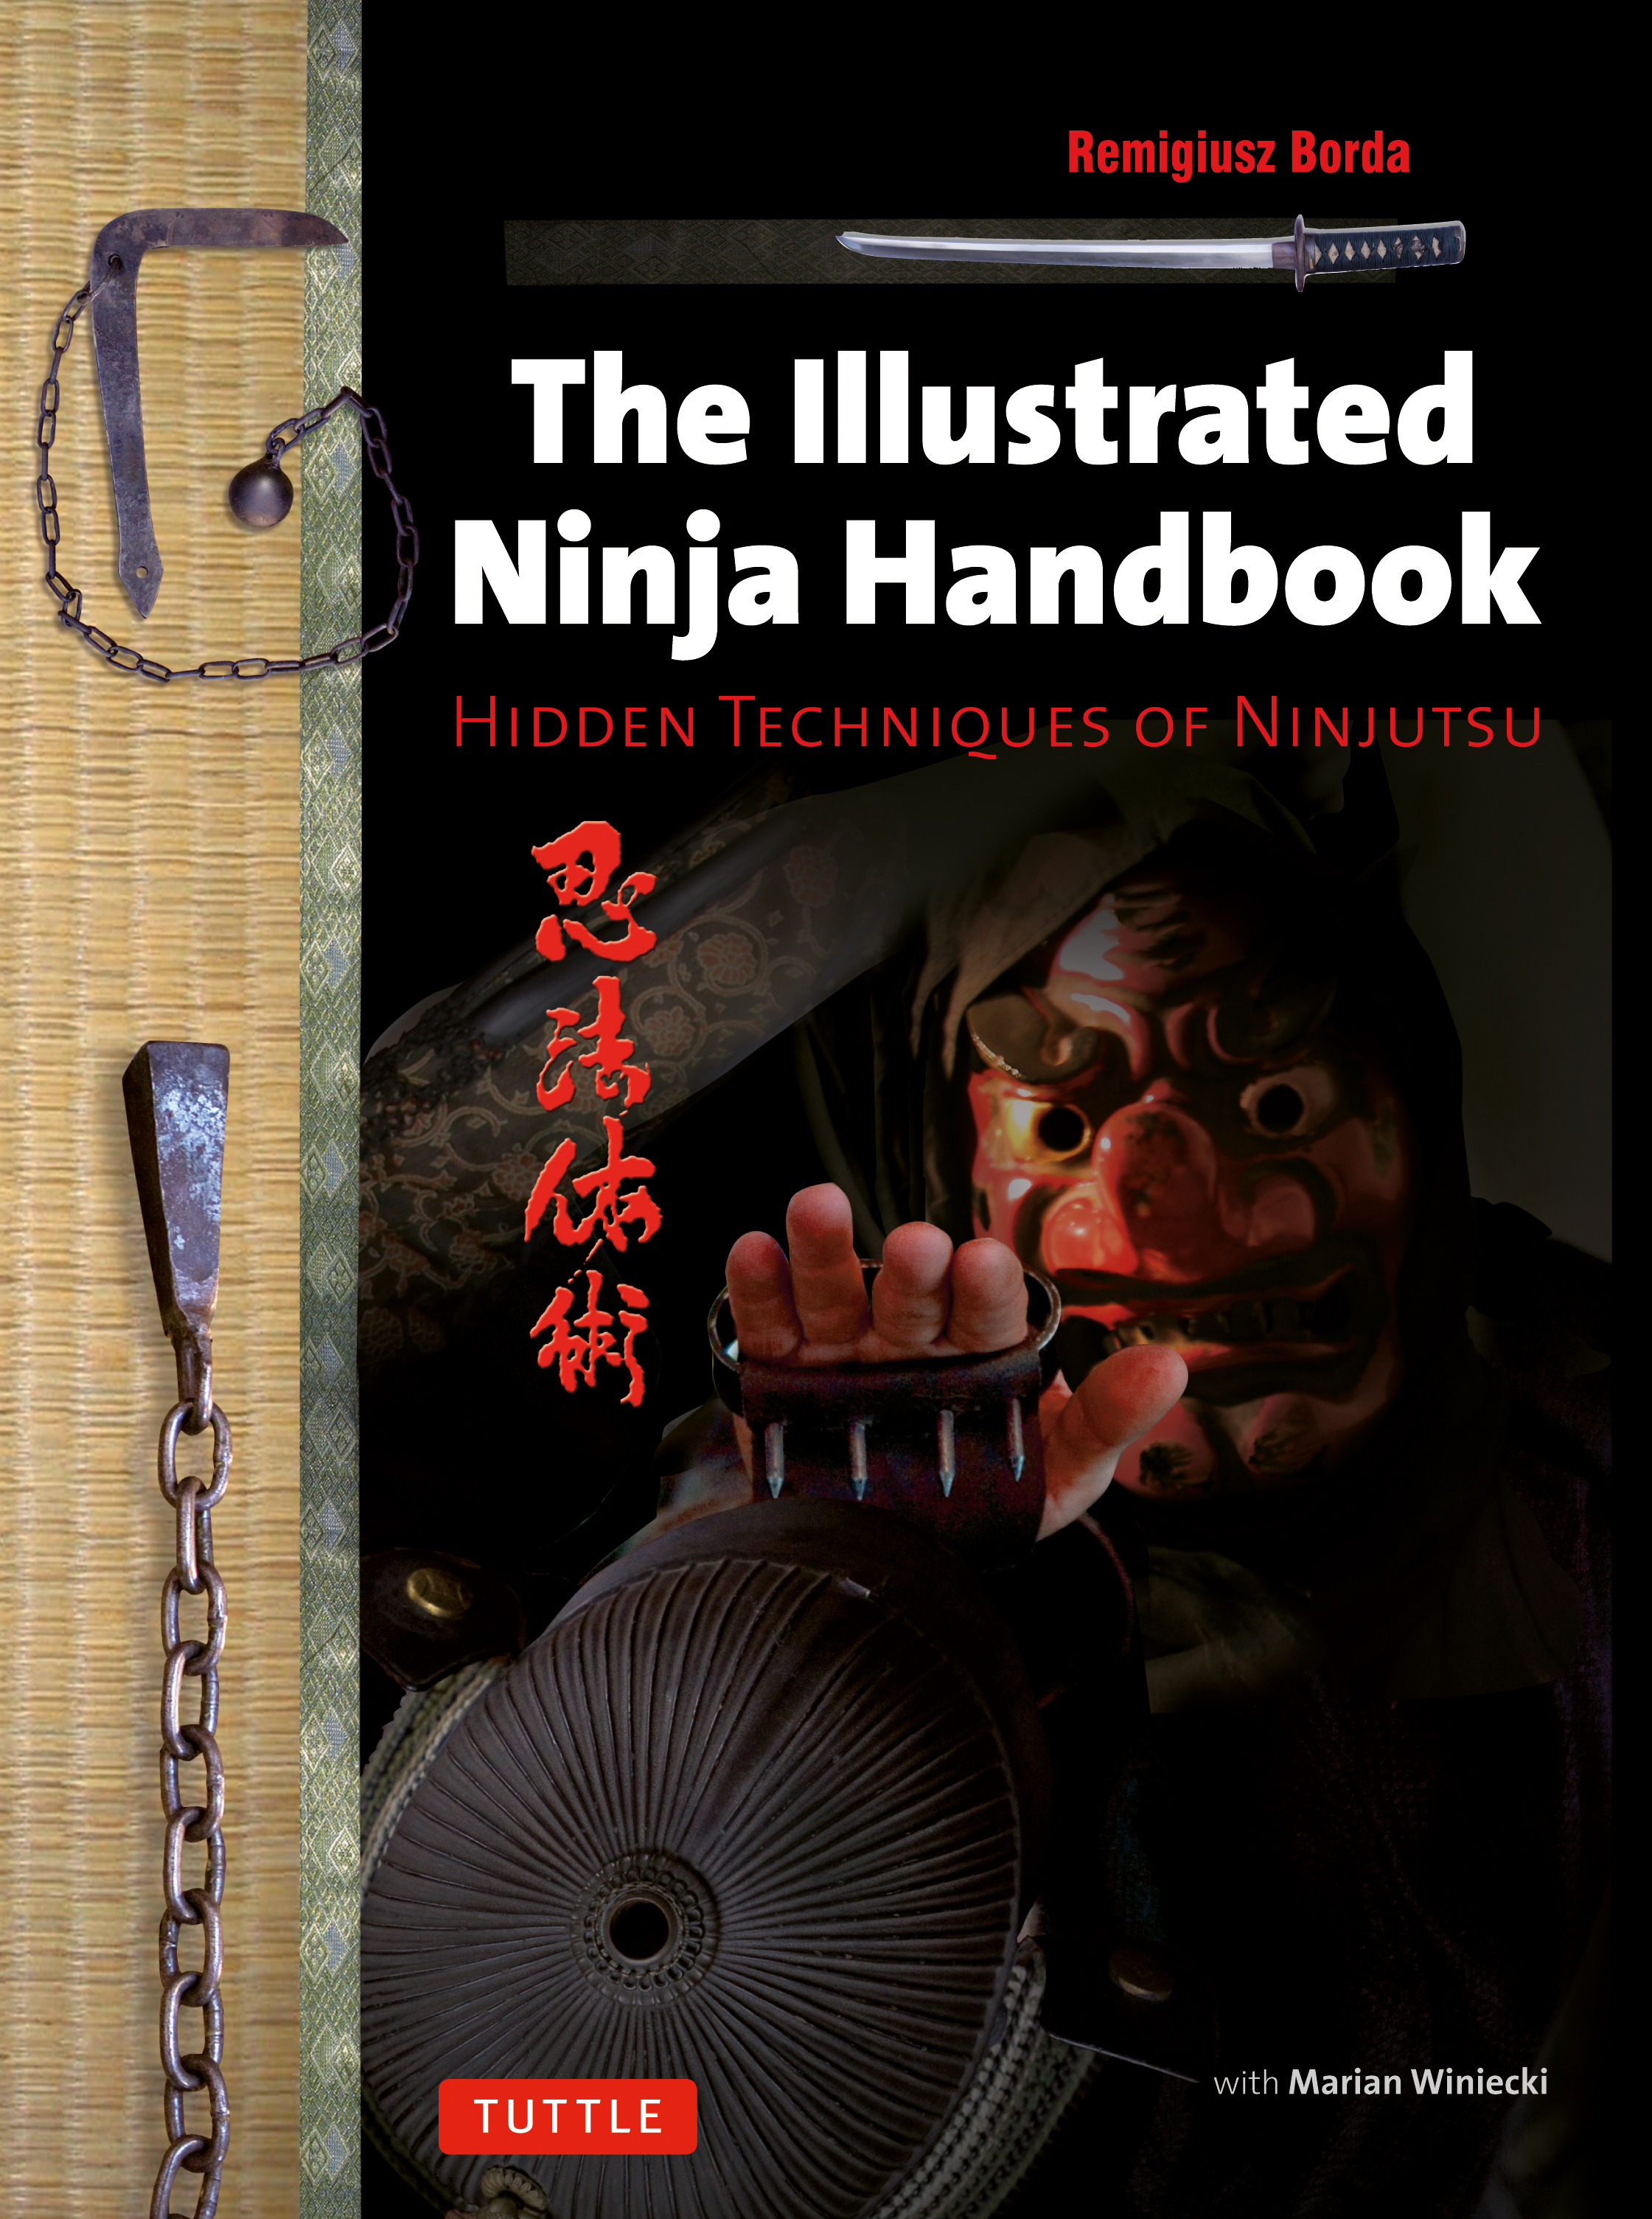 Ninjutsu Instructor Brings Ancient Art Out of the Shadows